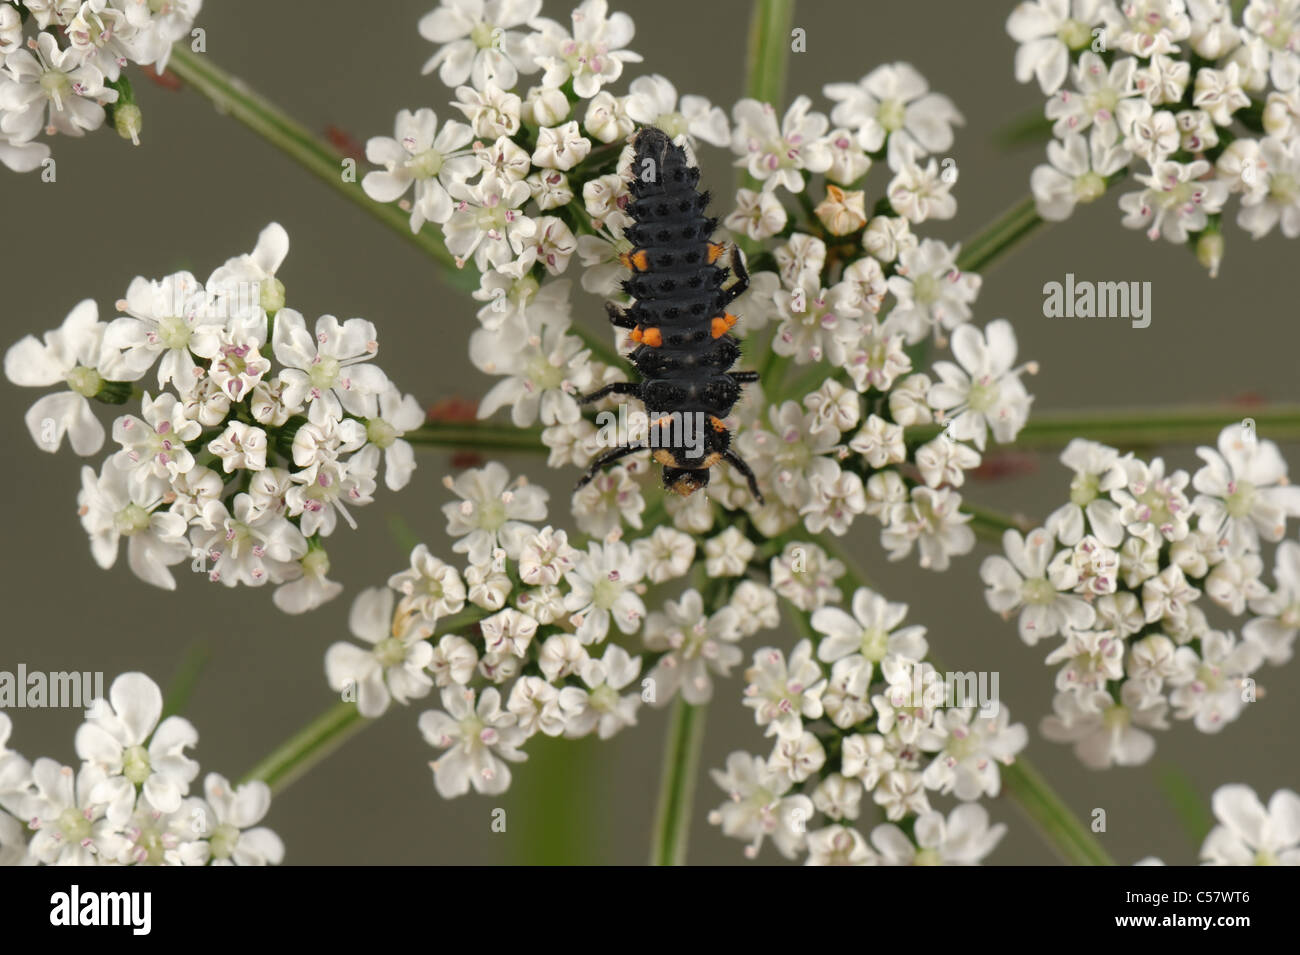 Seven spot ladybird, Coccinella septempunctata larva on a fool's parsley flowering umbel Stock Photo